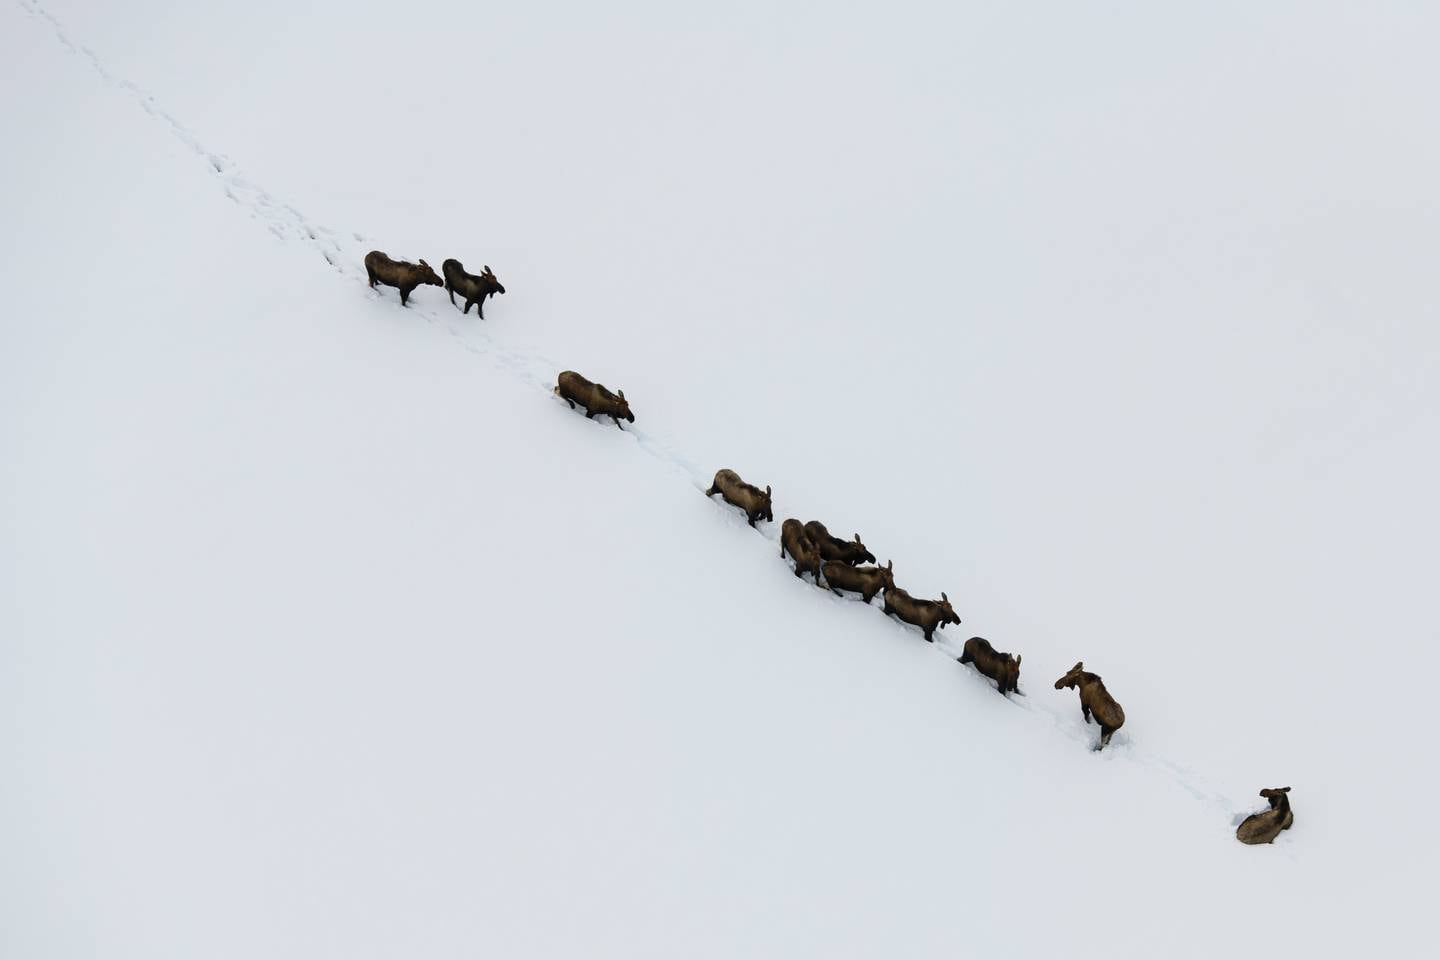 Iditarod 2019, Iditarod Trail Sled Dog Race, Eagle Island